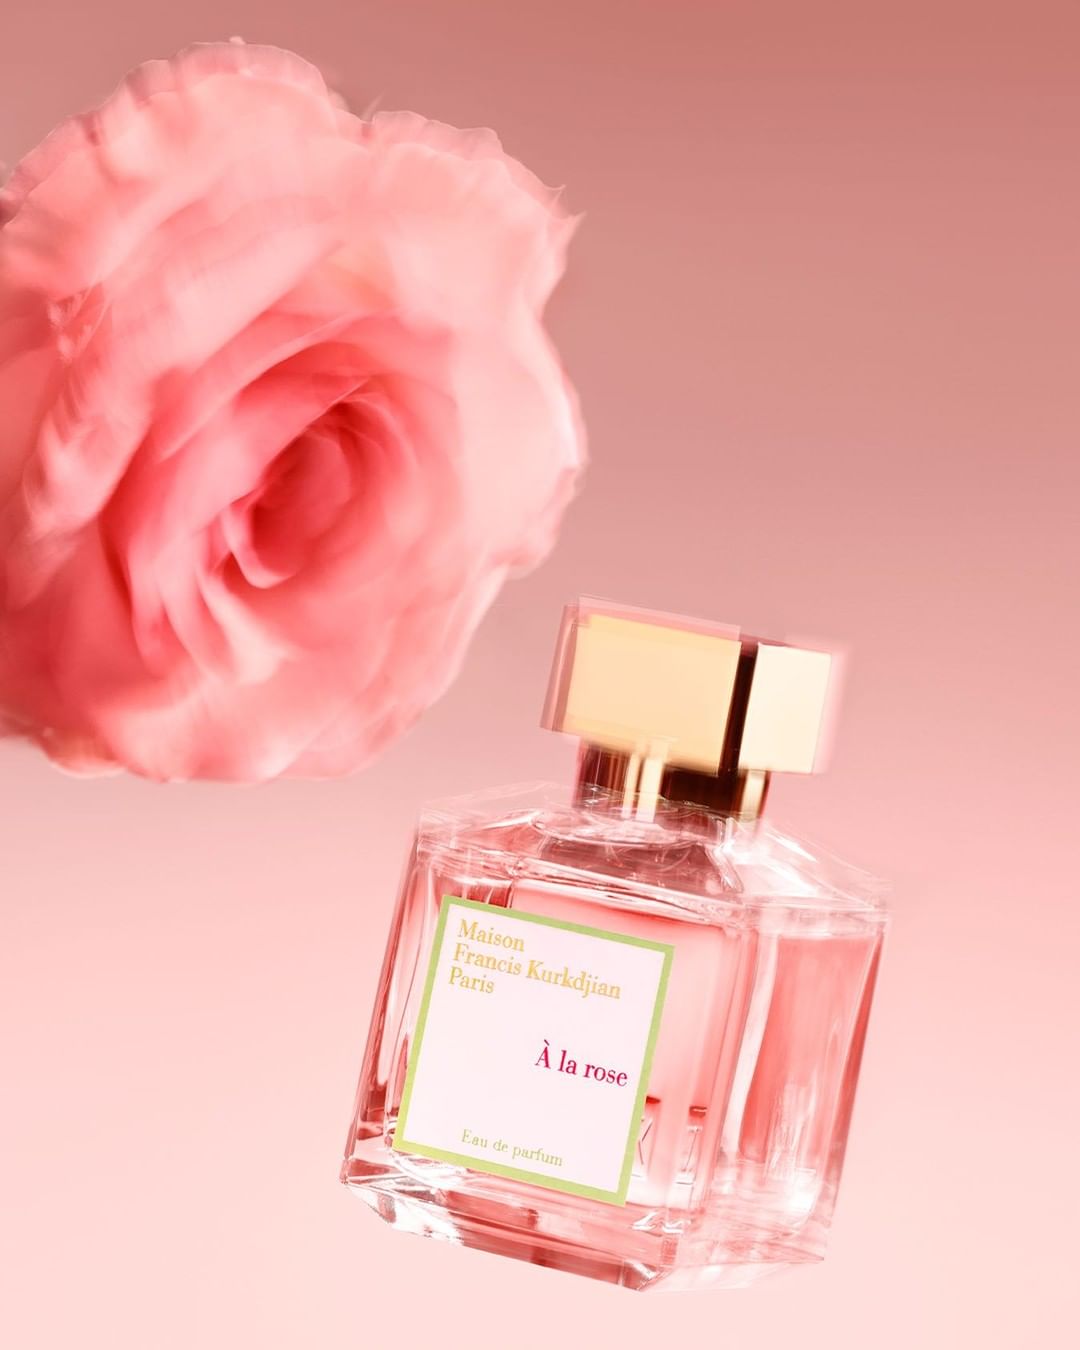 A la rose - body oil by Maison Francis Kurkdjian • Perfume Lounge